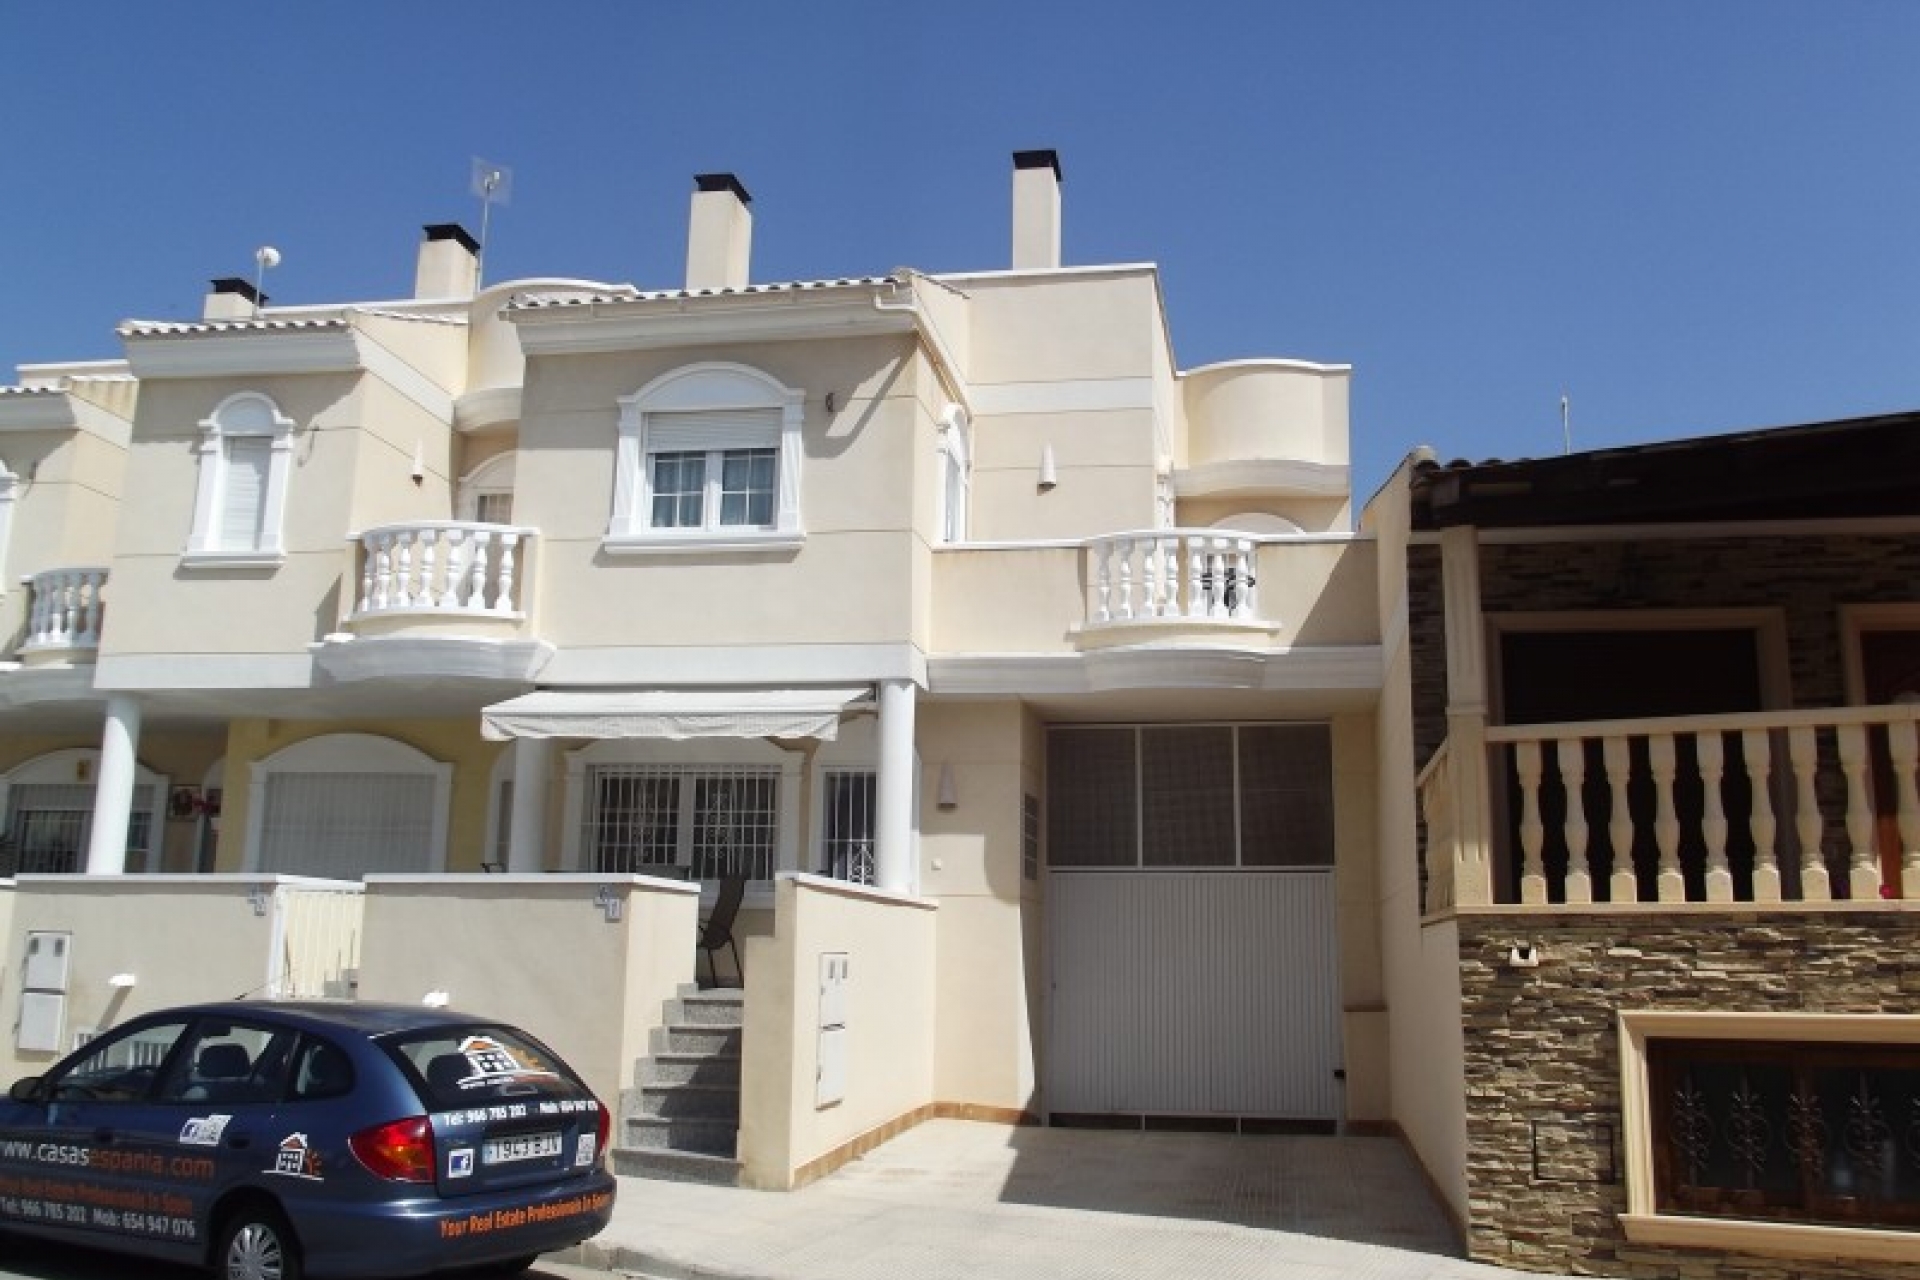 Cheap bargain property for sale, cheap townhouse property in Heredades near Formentera Almoradi, Costa Blanca, Spain